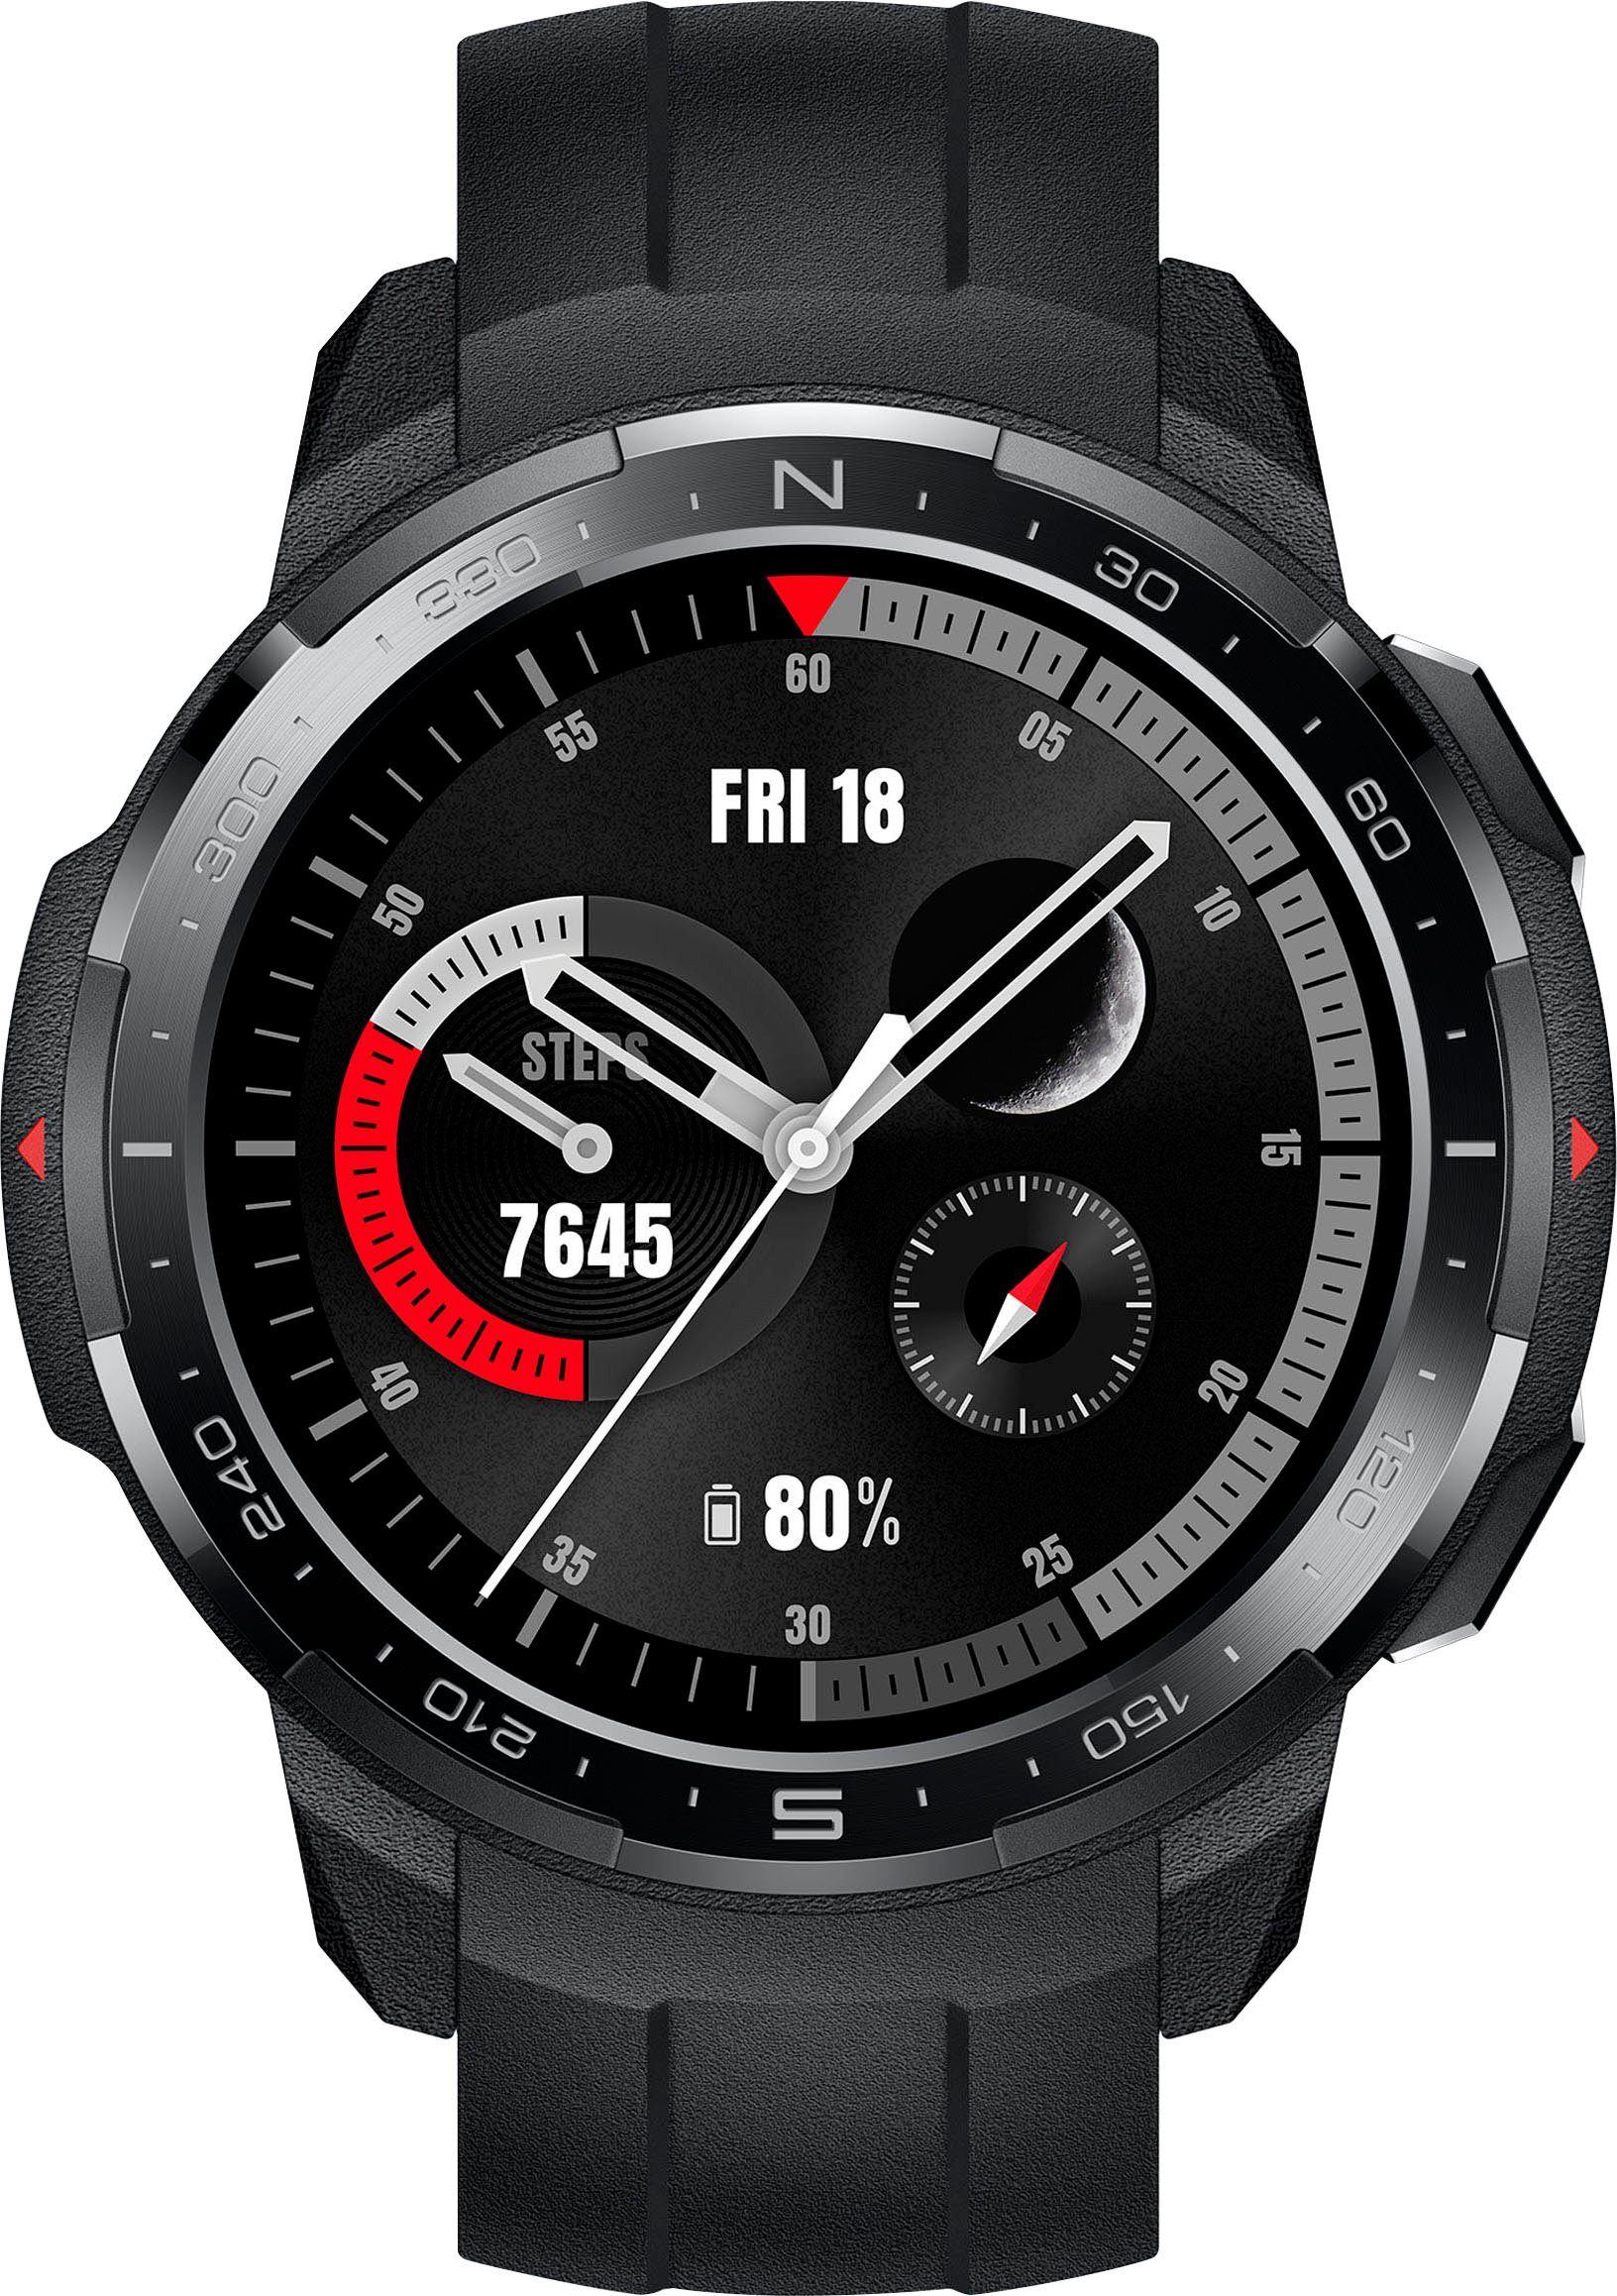 Honor watch pro цена. Смарт-часы Honor watch GS Pro. Смарт-часы Honor watch GS Pro Black. Honor watch GS Pro, угольный черный. Honor GS Pro.